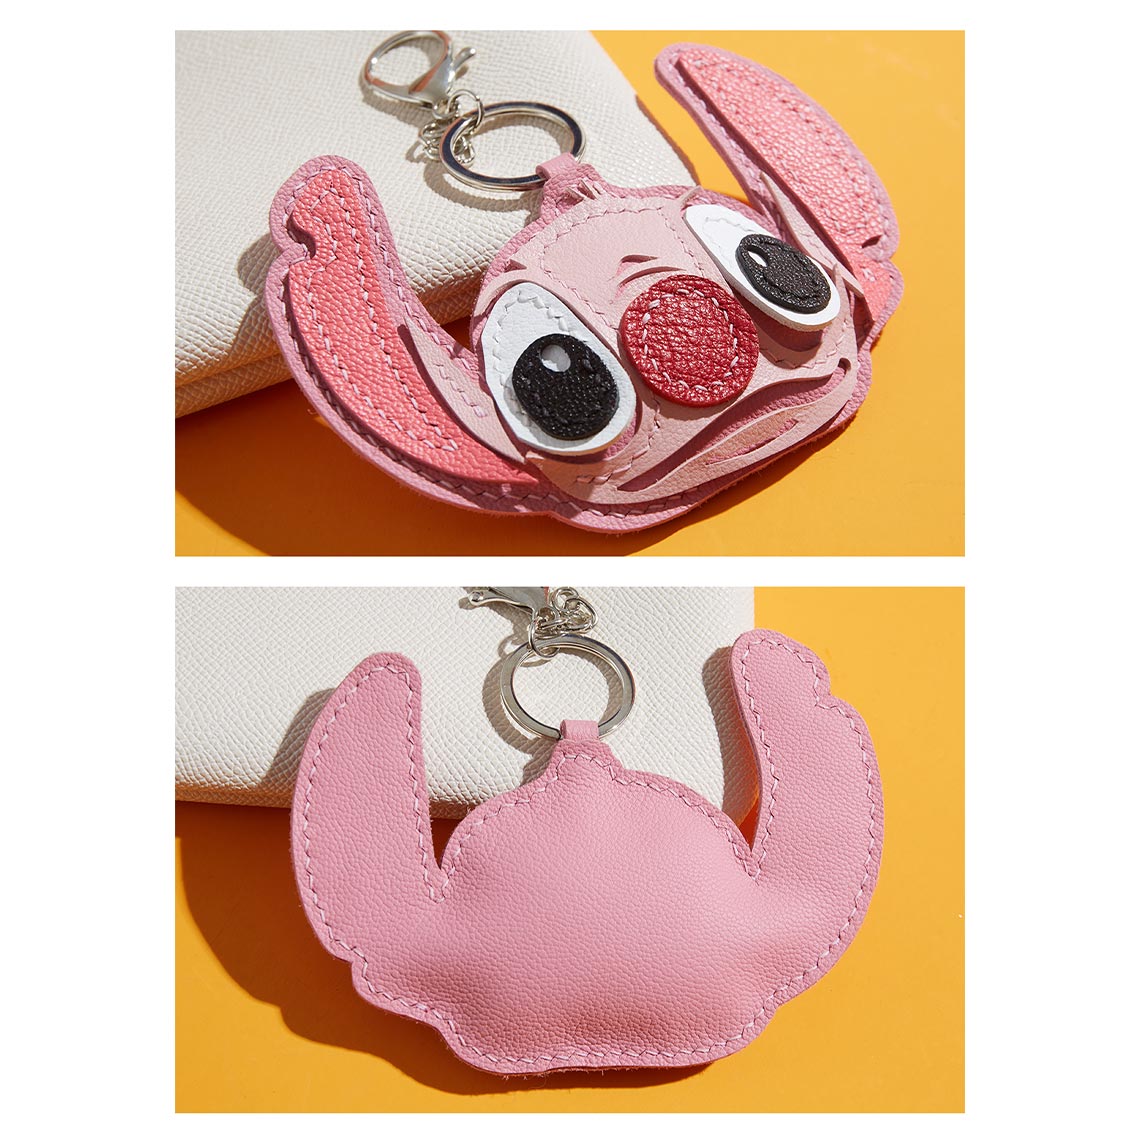 Custom Leather keychain/keyring | DIY handmade gift ideas | Cartoon keychain for kids